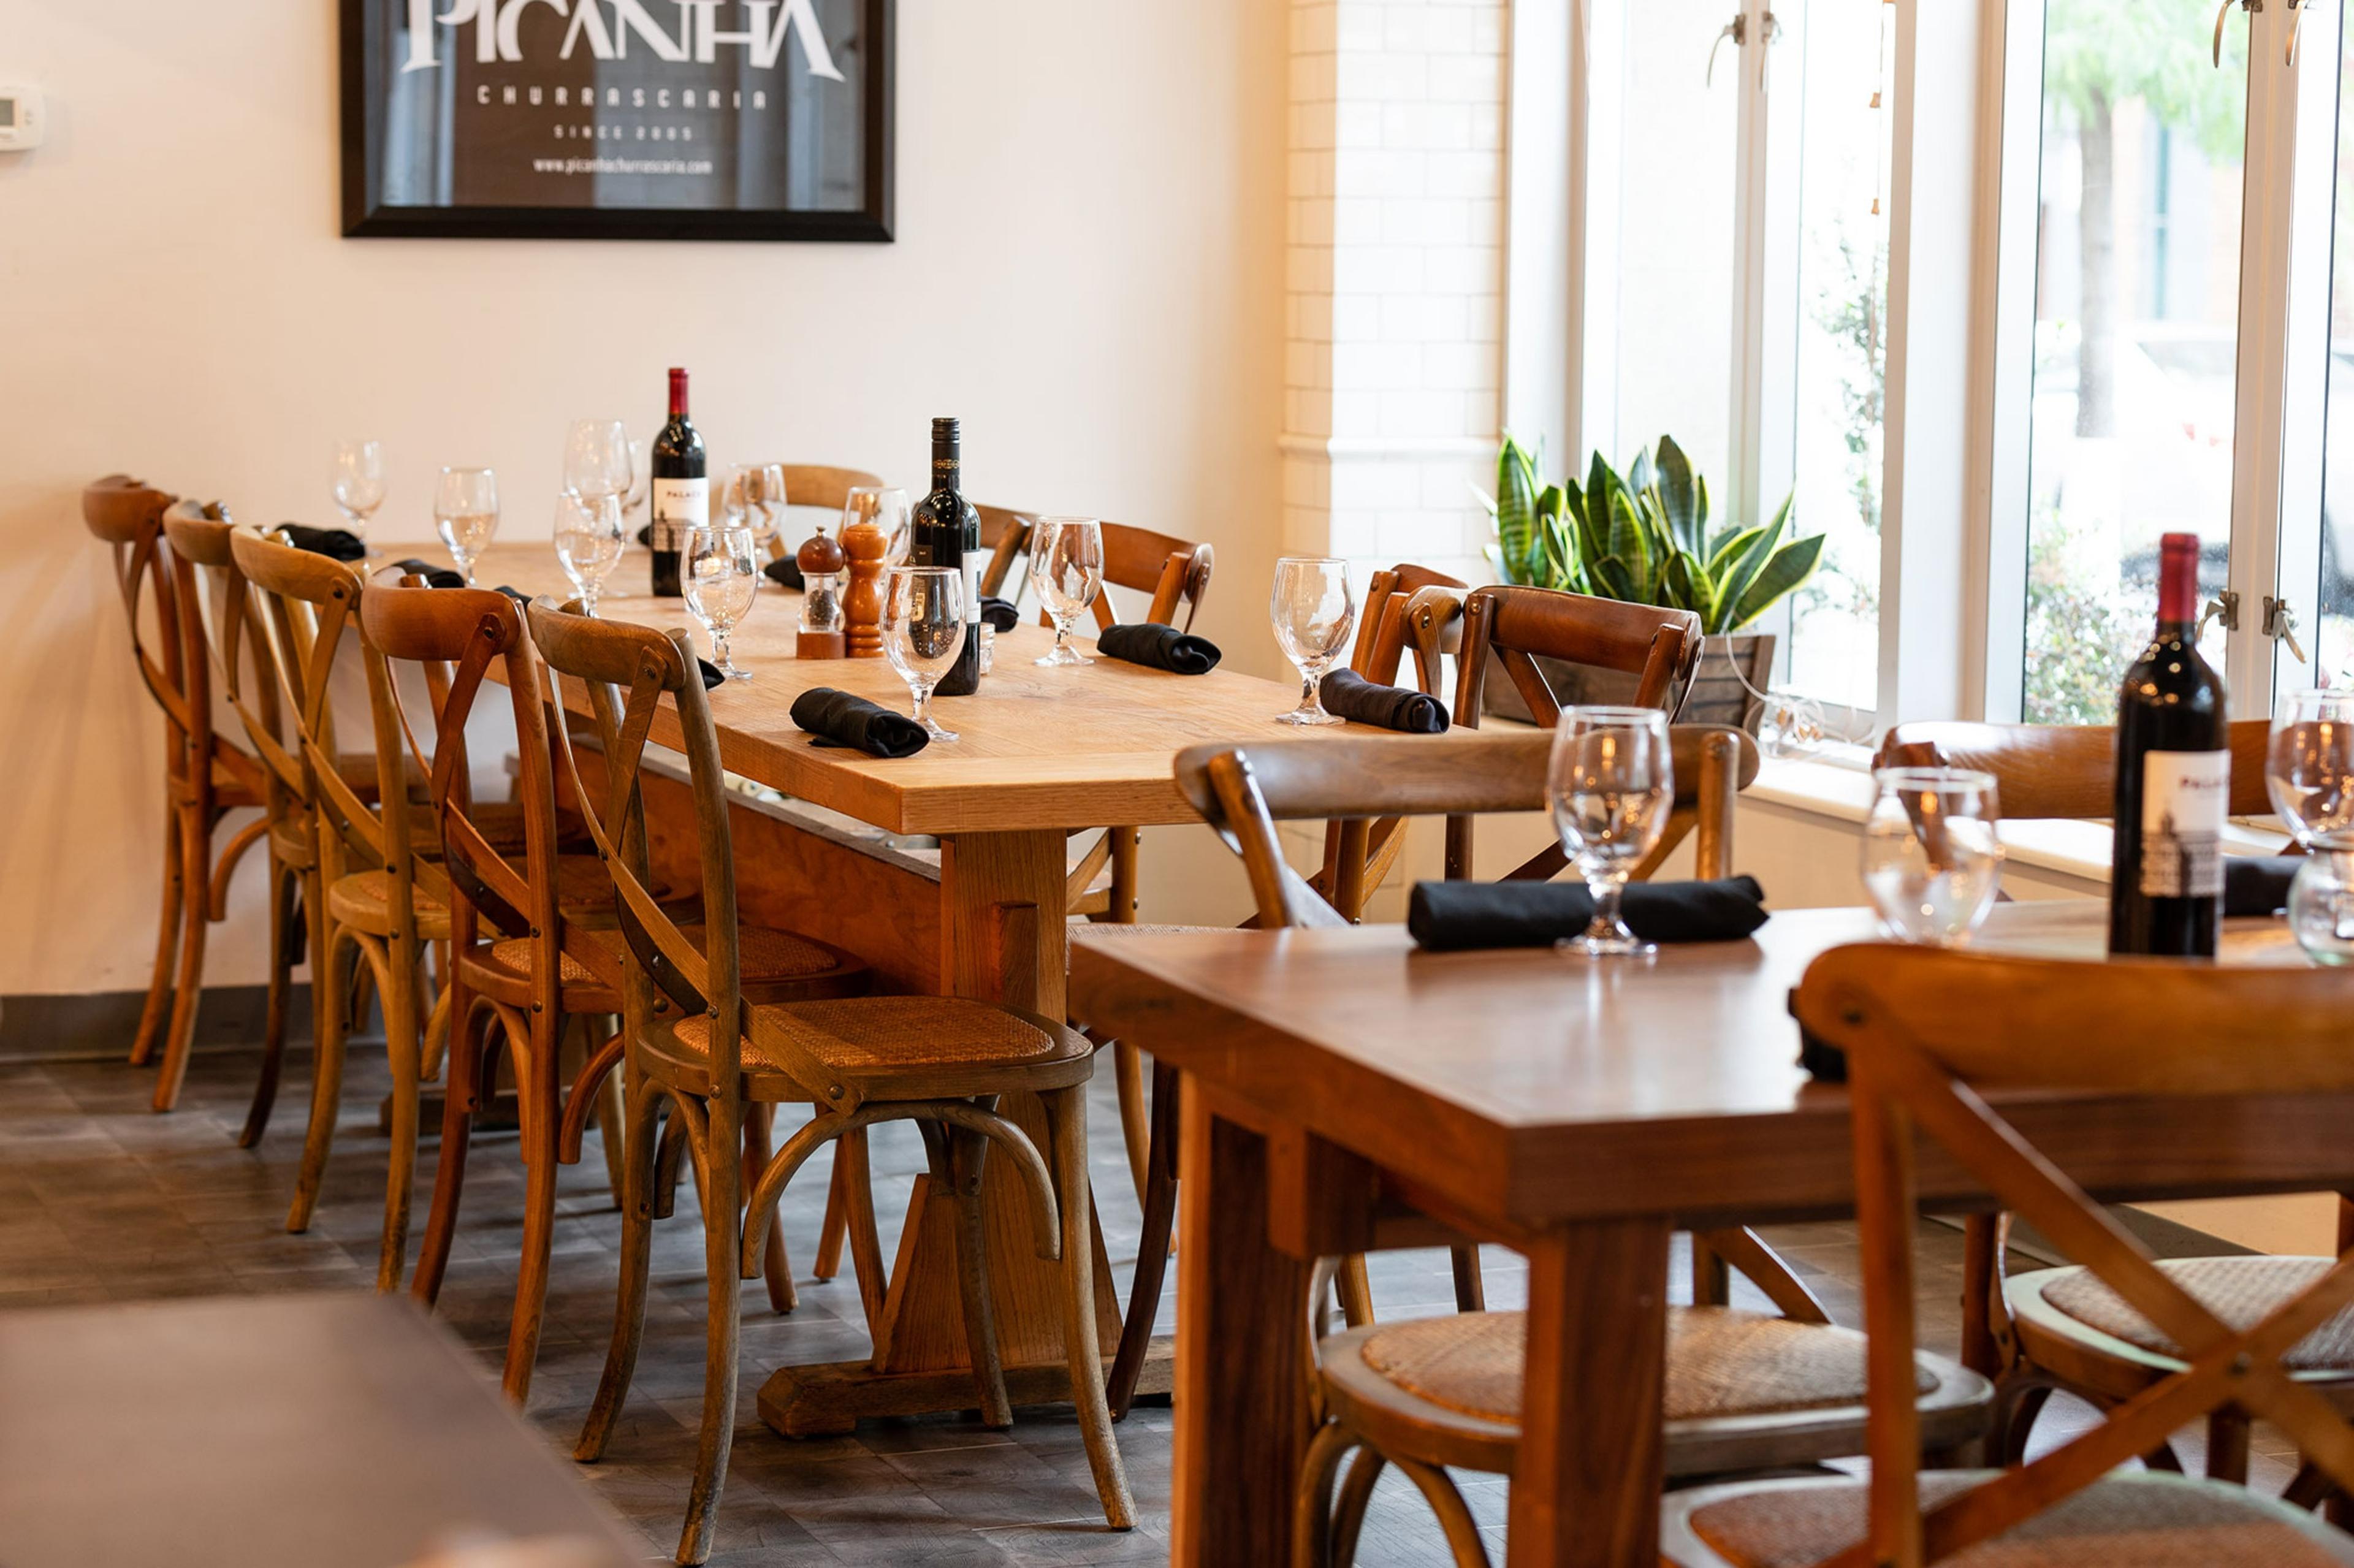 Picanha Brazilian Steakhouse - Center City